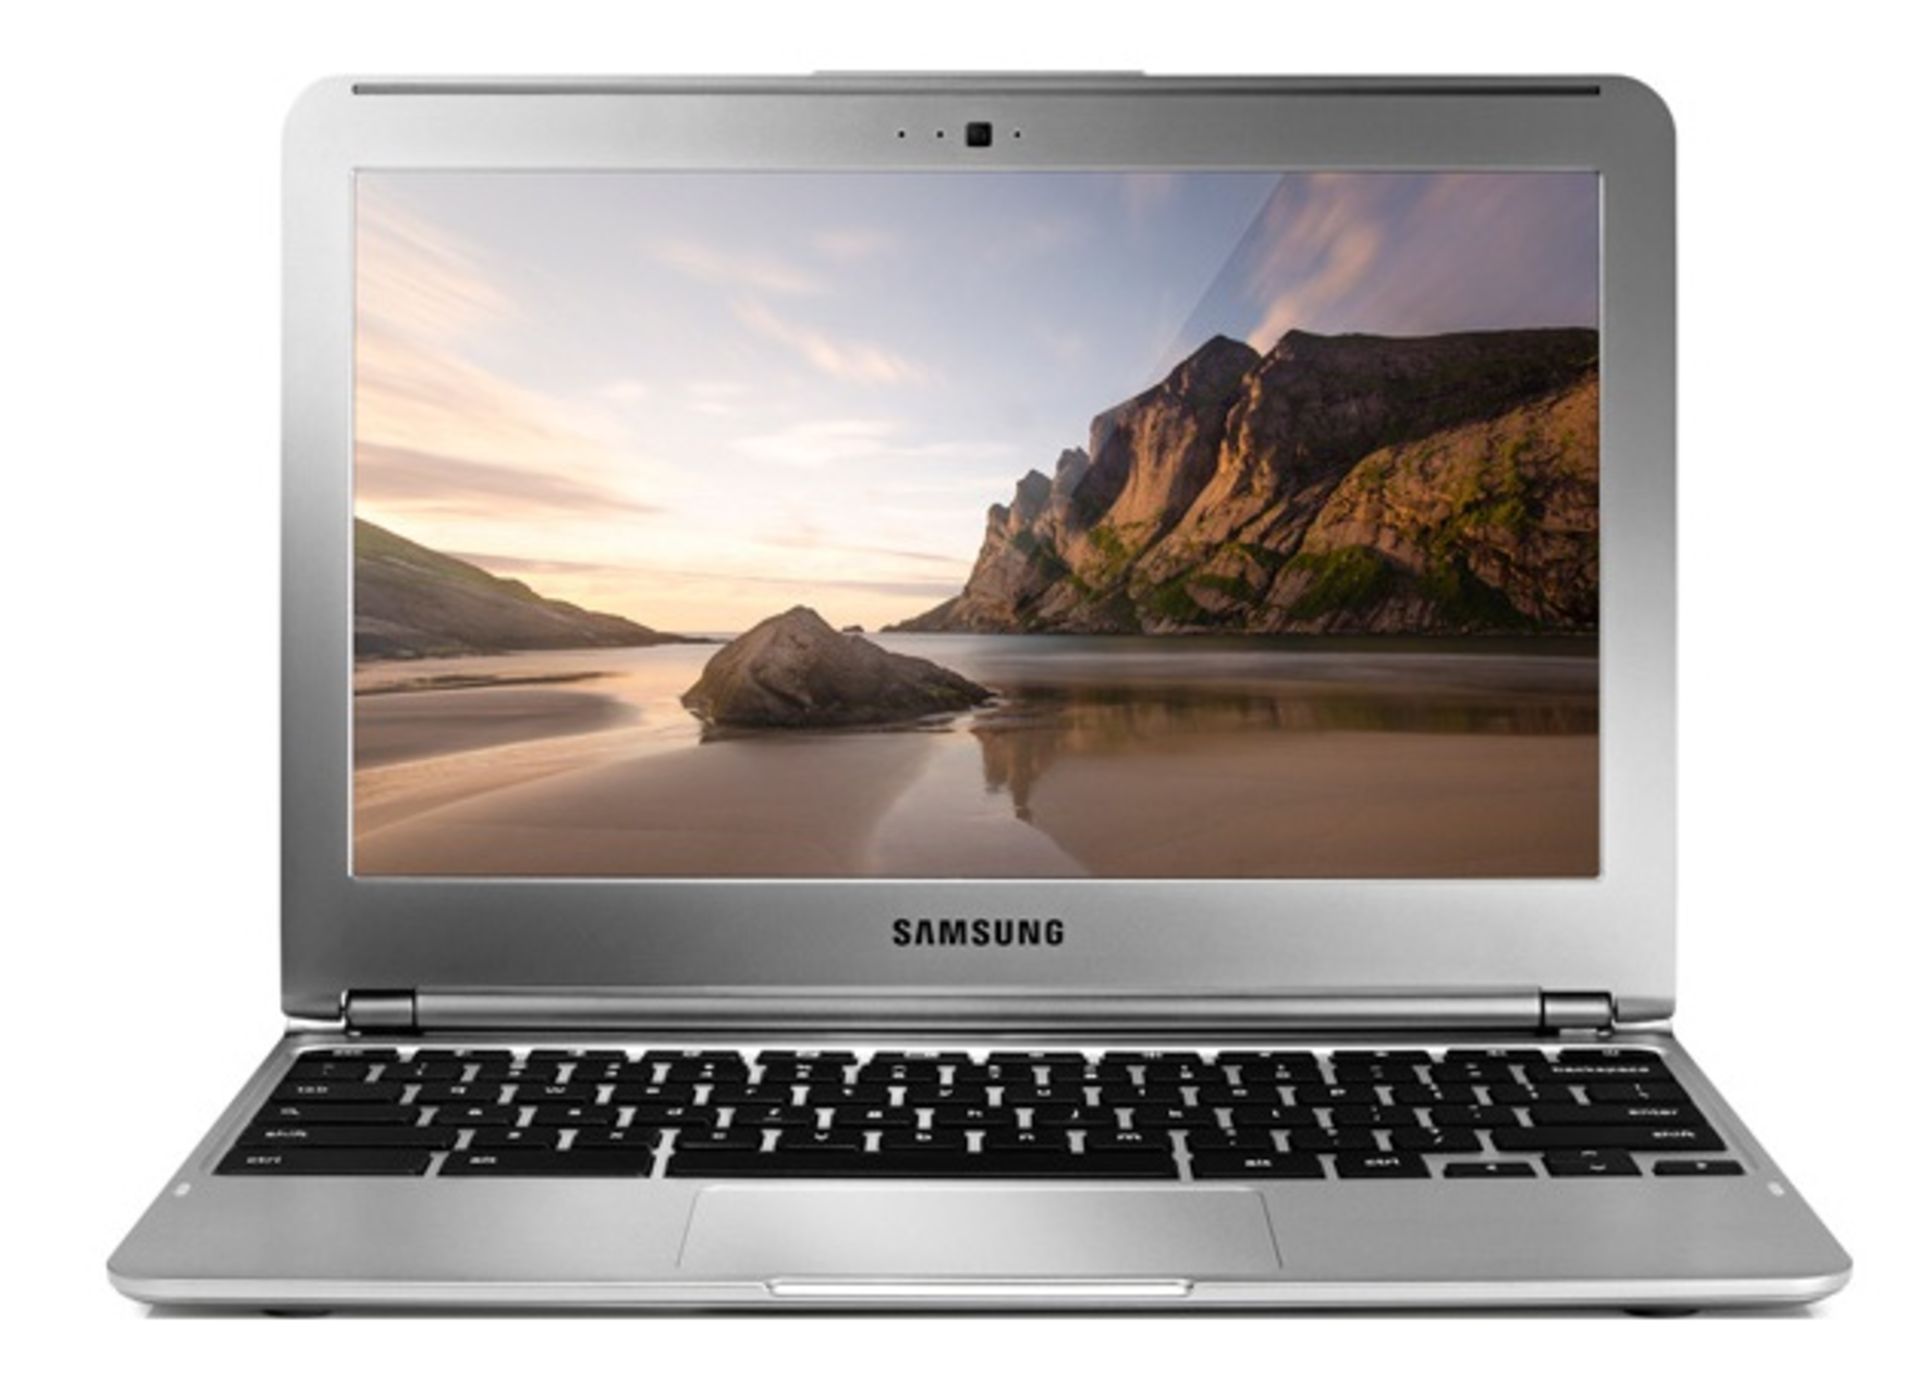 V *TRADE QTY* Grade A Samsung Chromebook XE Series 11.6" 16:9 LED Display - 2GB - 16GB - USB 2 & 3 - - Image 2 of 2